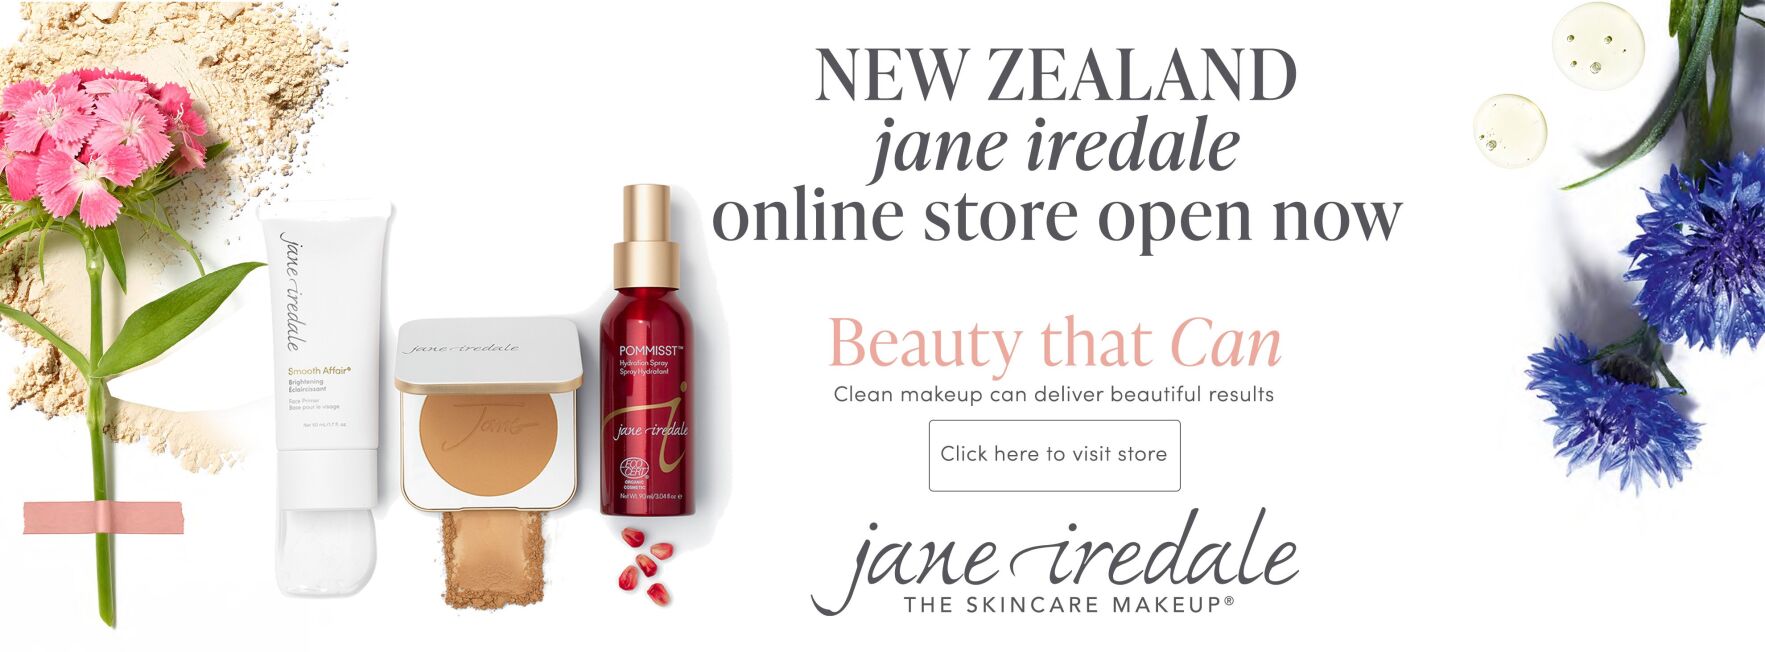 NEW NZ jane iredale online store